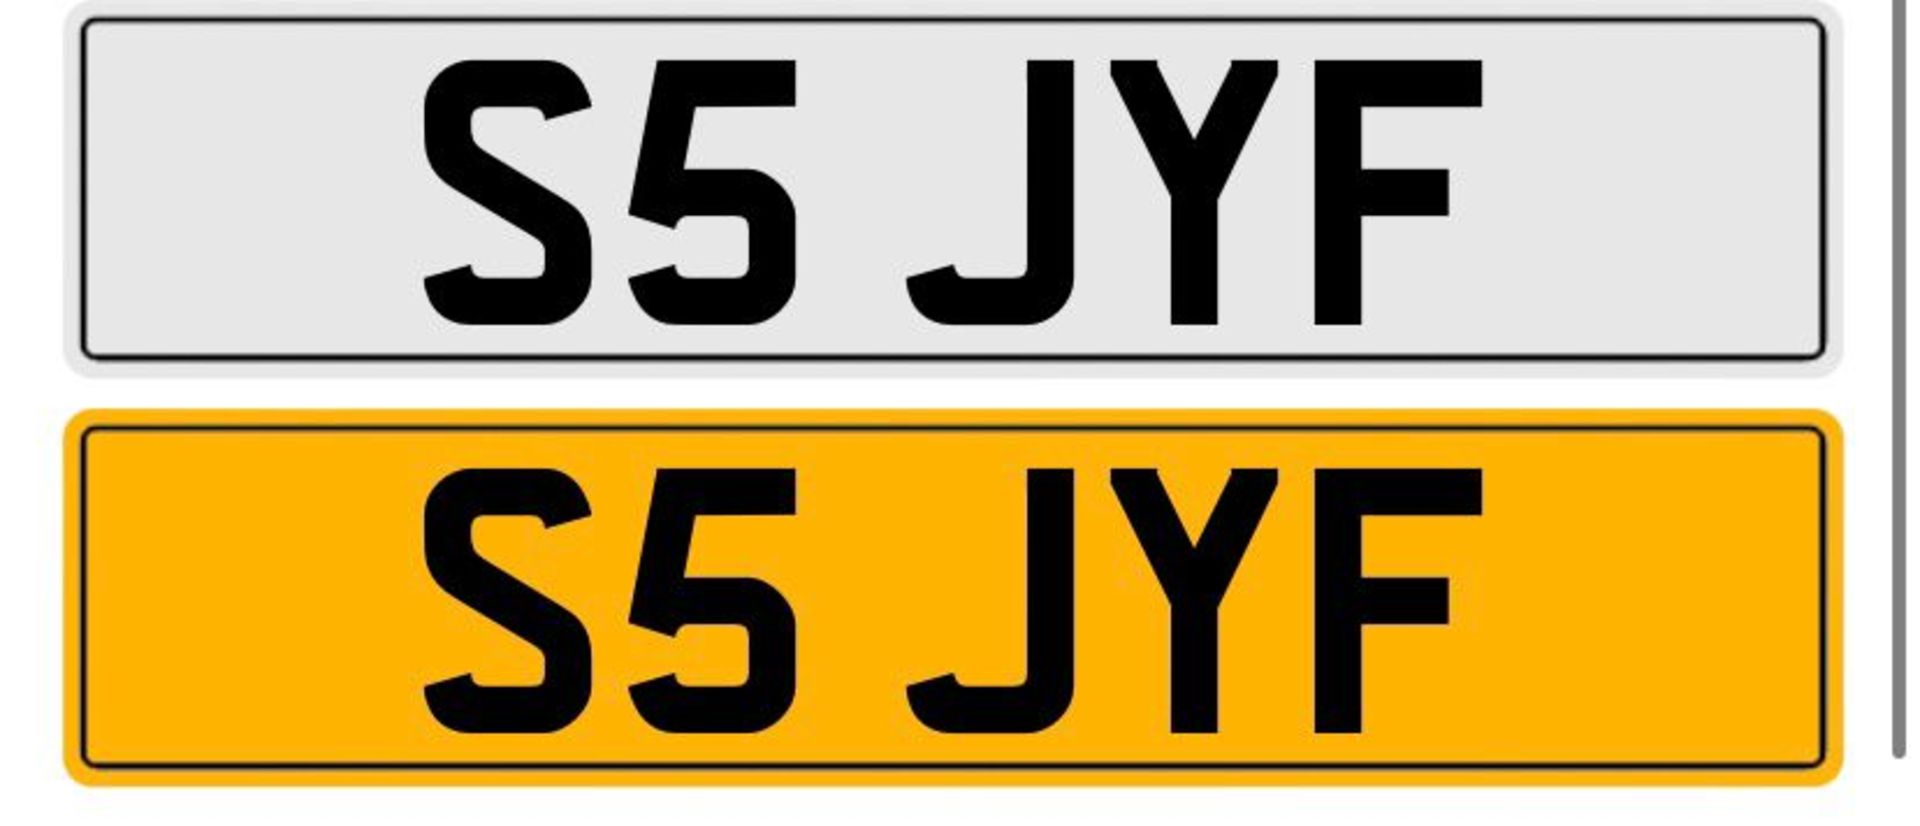 S5 JYF Audi A5 Or S5 On Retention *NO VAT*